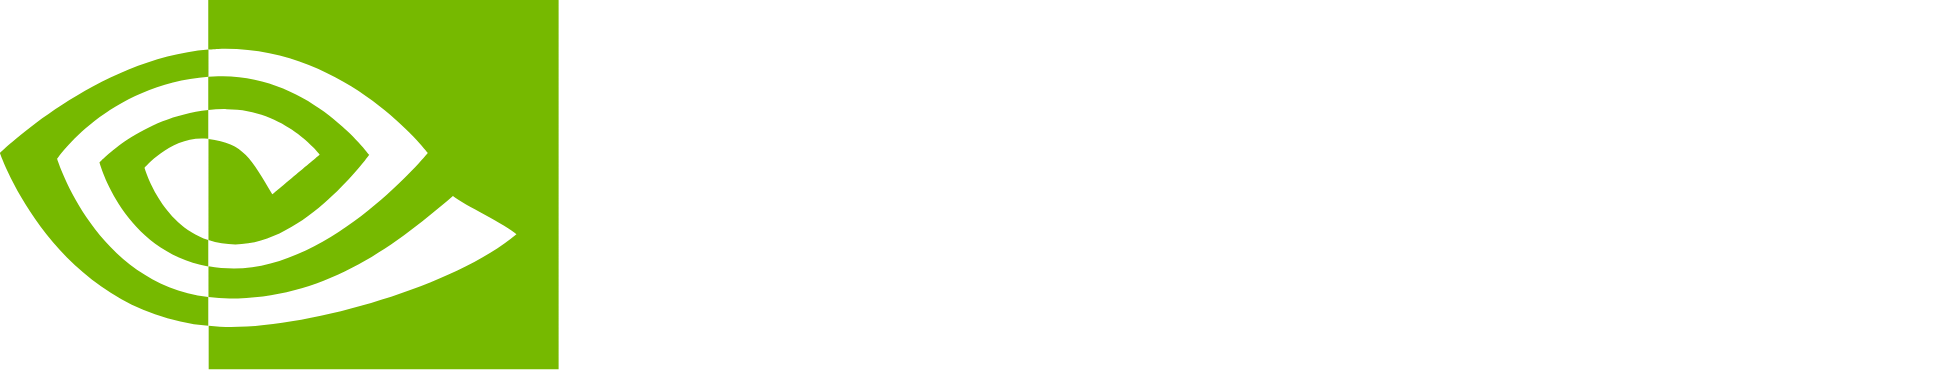 NVIDIA Logo groß für dunkle Hintergründe (transparentes PNG)